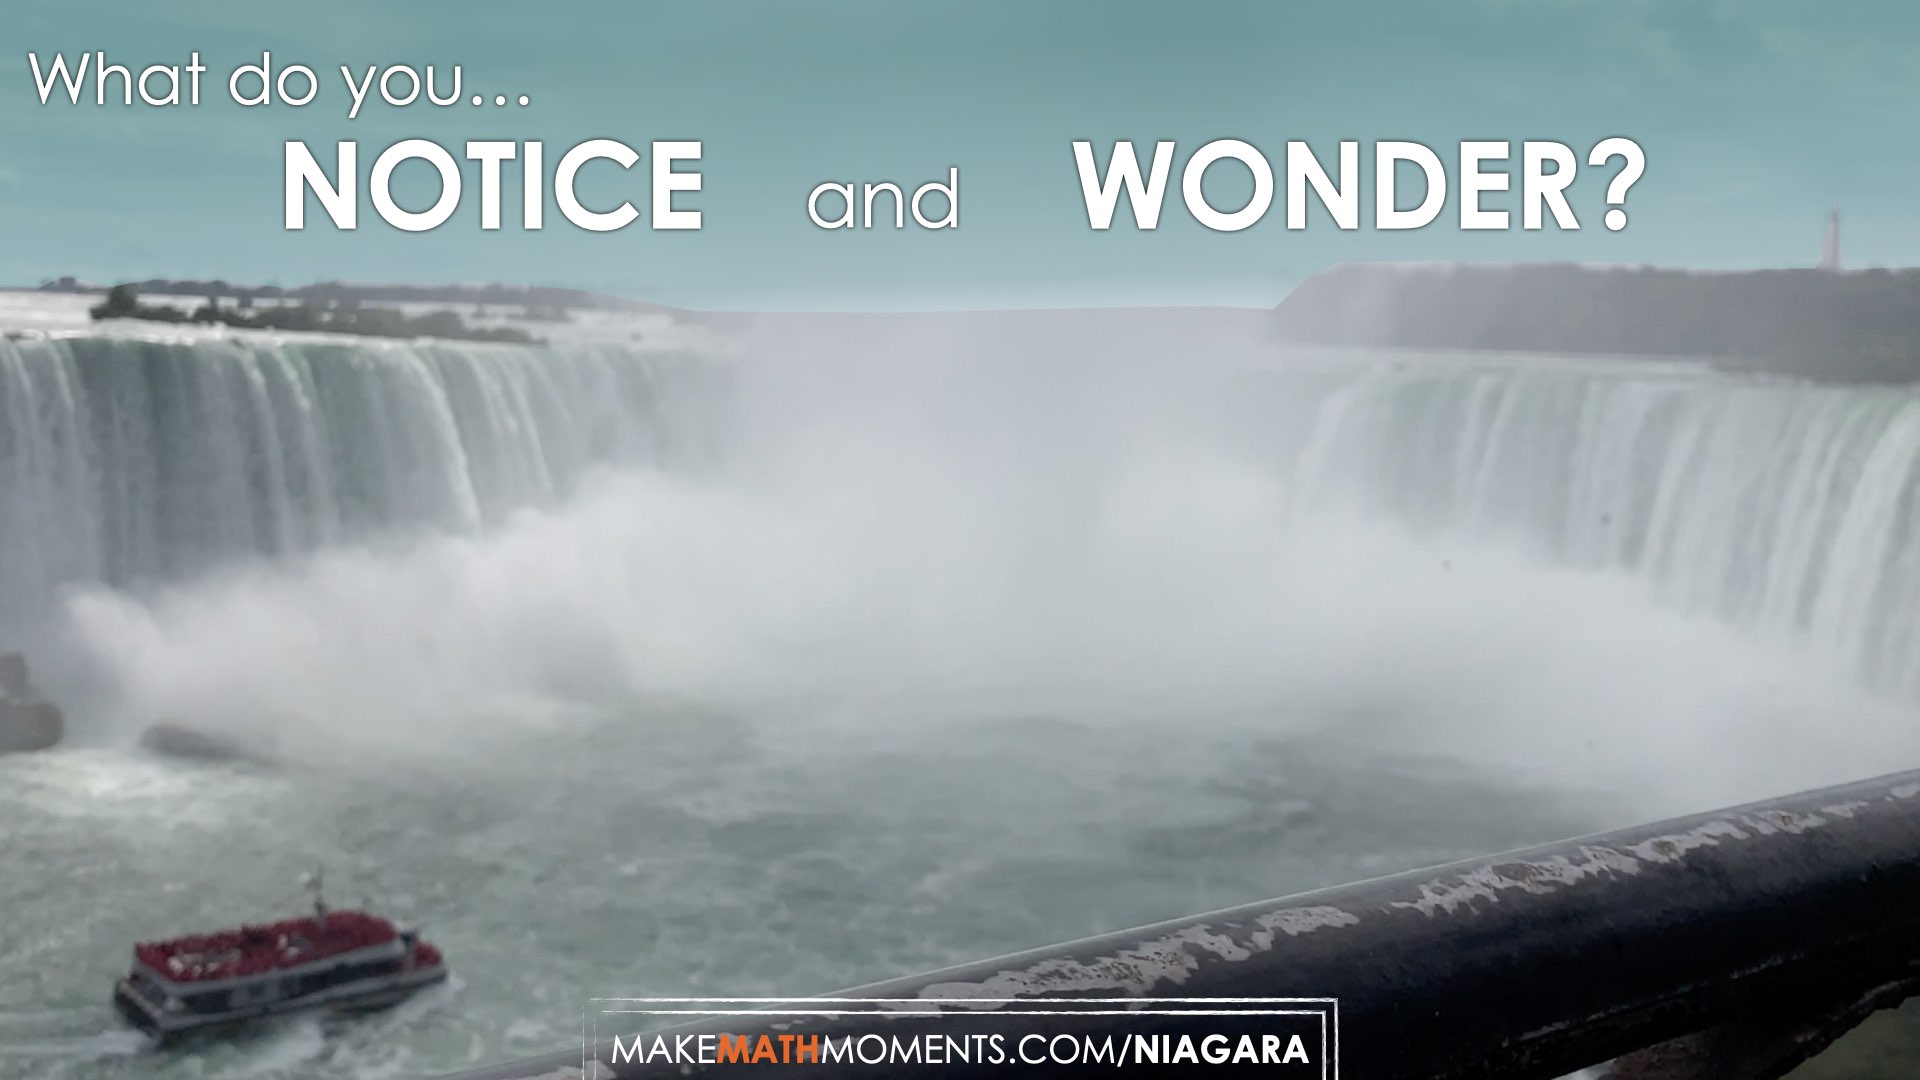 Niagara-Falls-Day-3-02-Spark-Image-Maid-of-the-Mist.001.jpeg